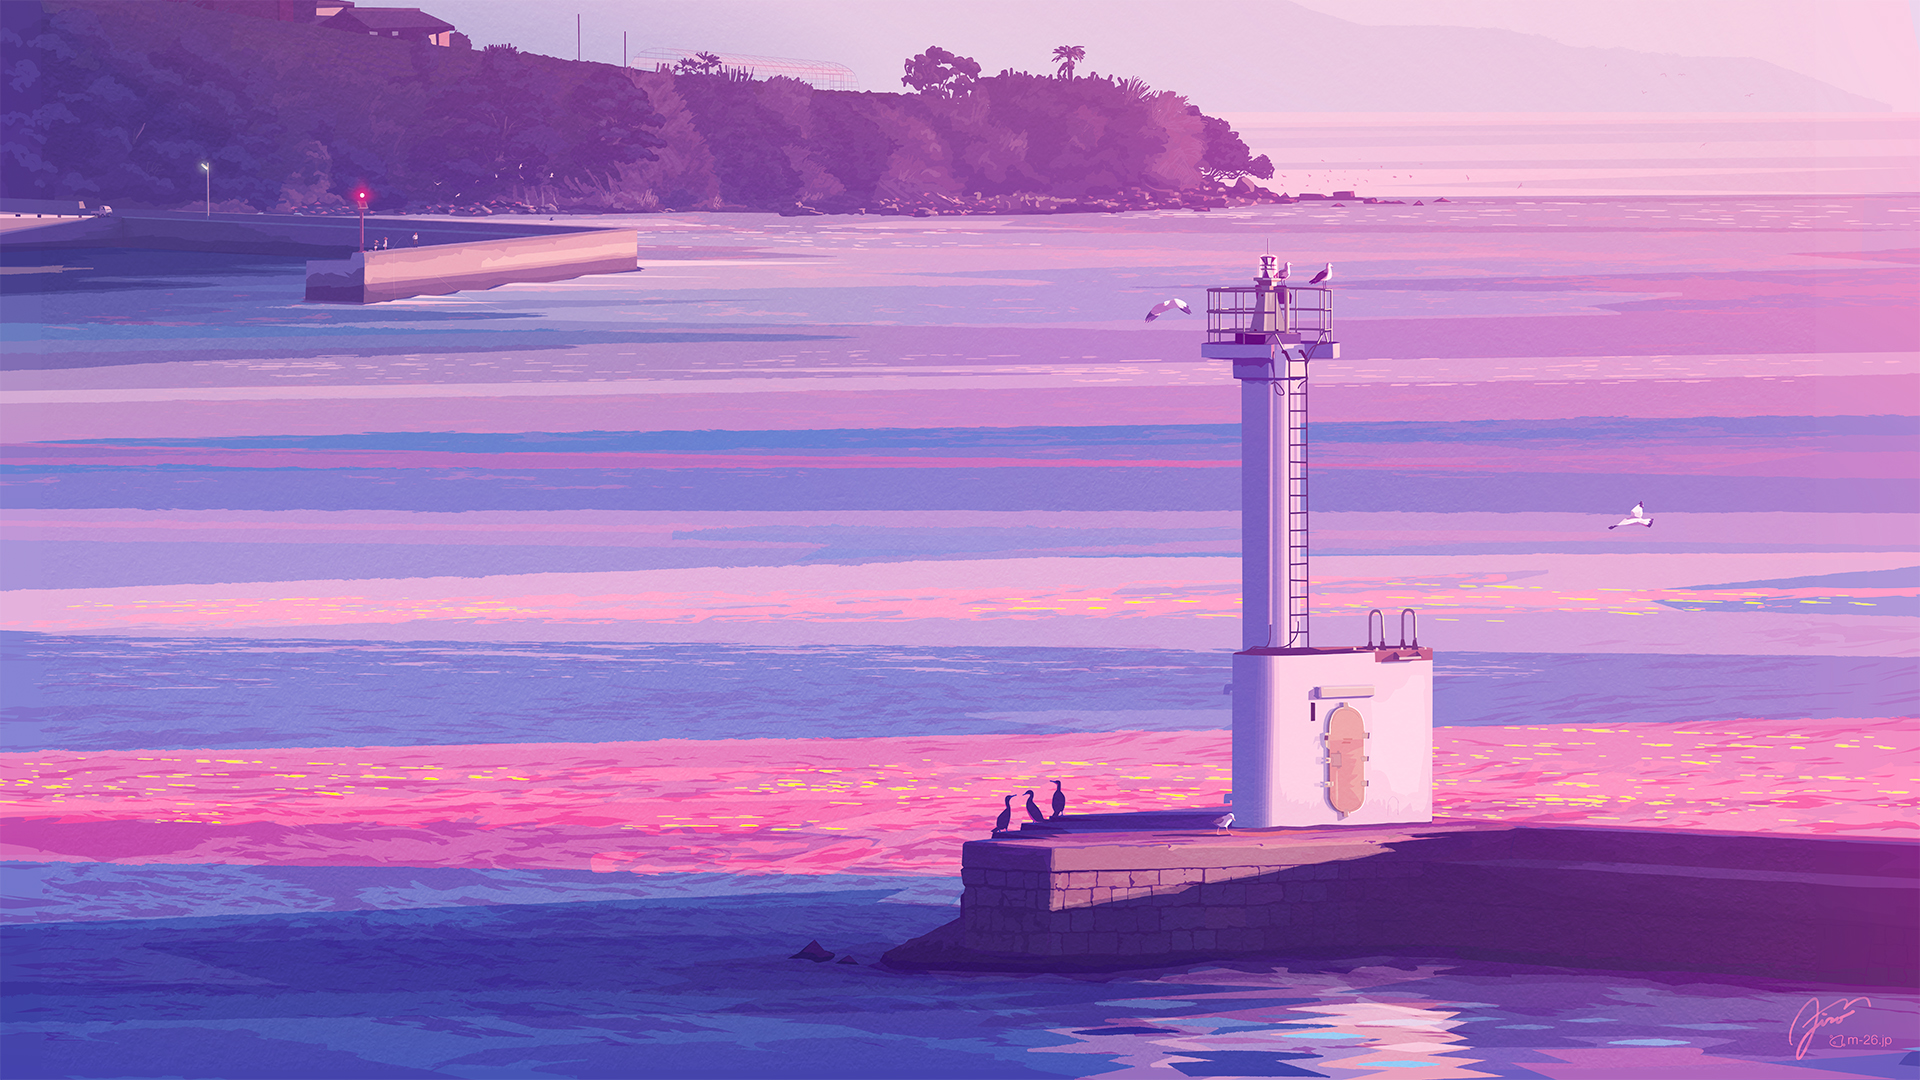 General 1920x1080 m26 digital art artwork illustration digital painting landscape nature sea water coast sunset watermarked breakwater